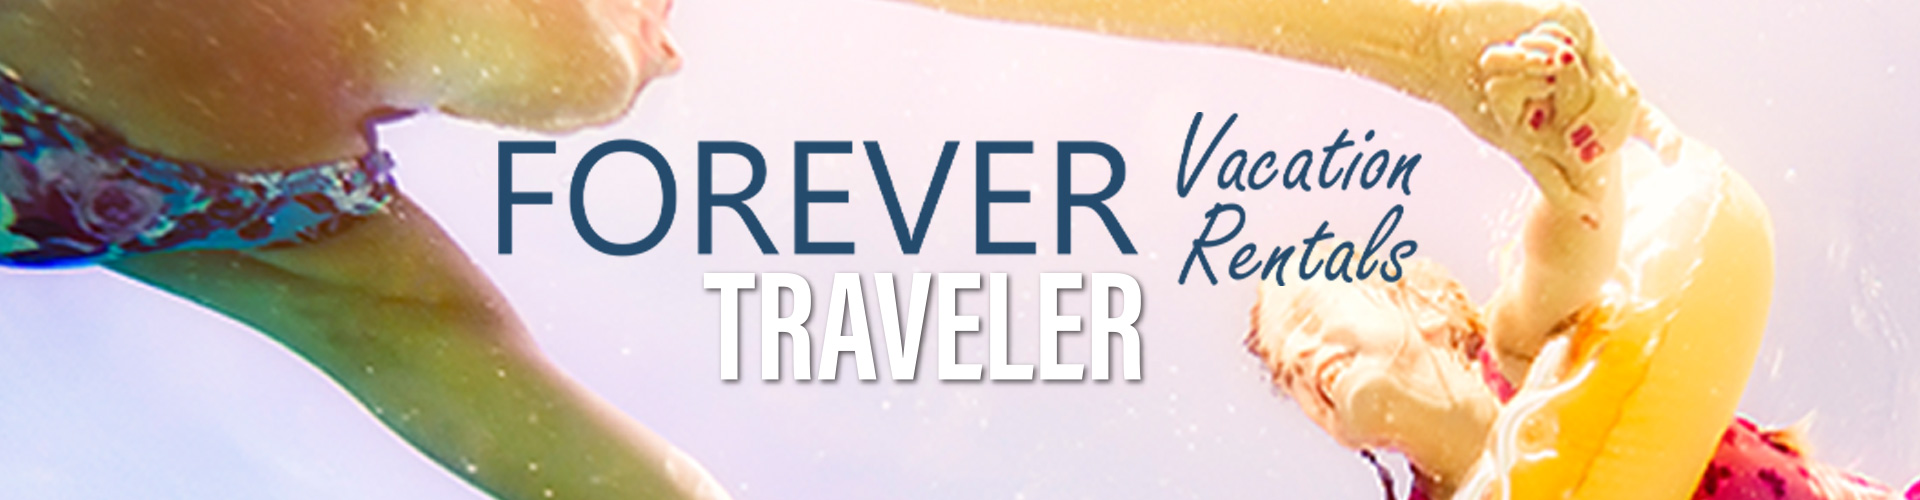 Forever Vacation Rentals 30A Traveler Banner